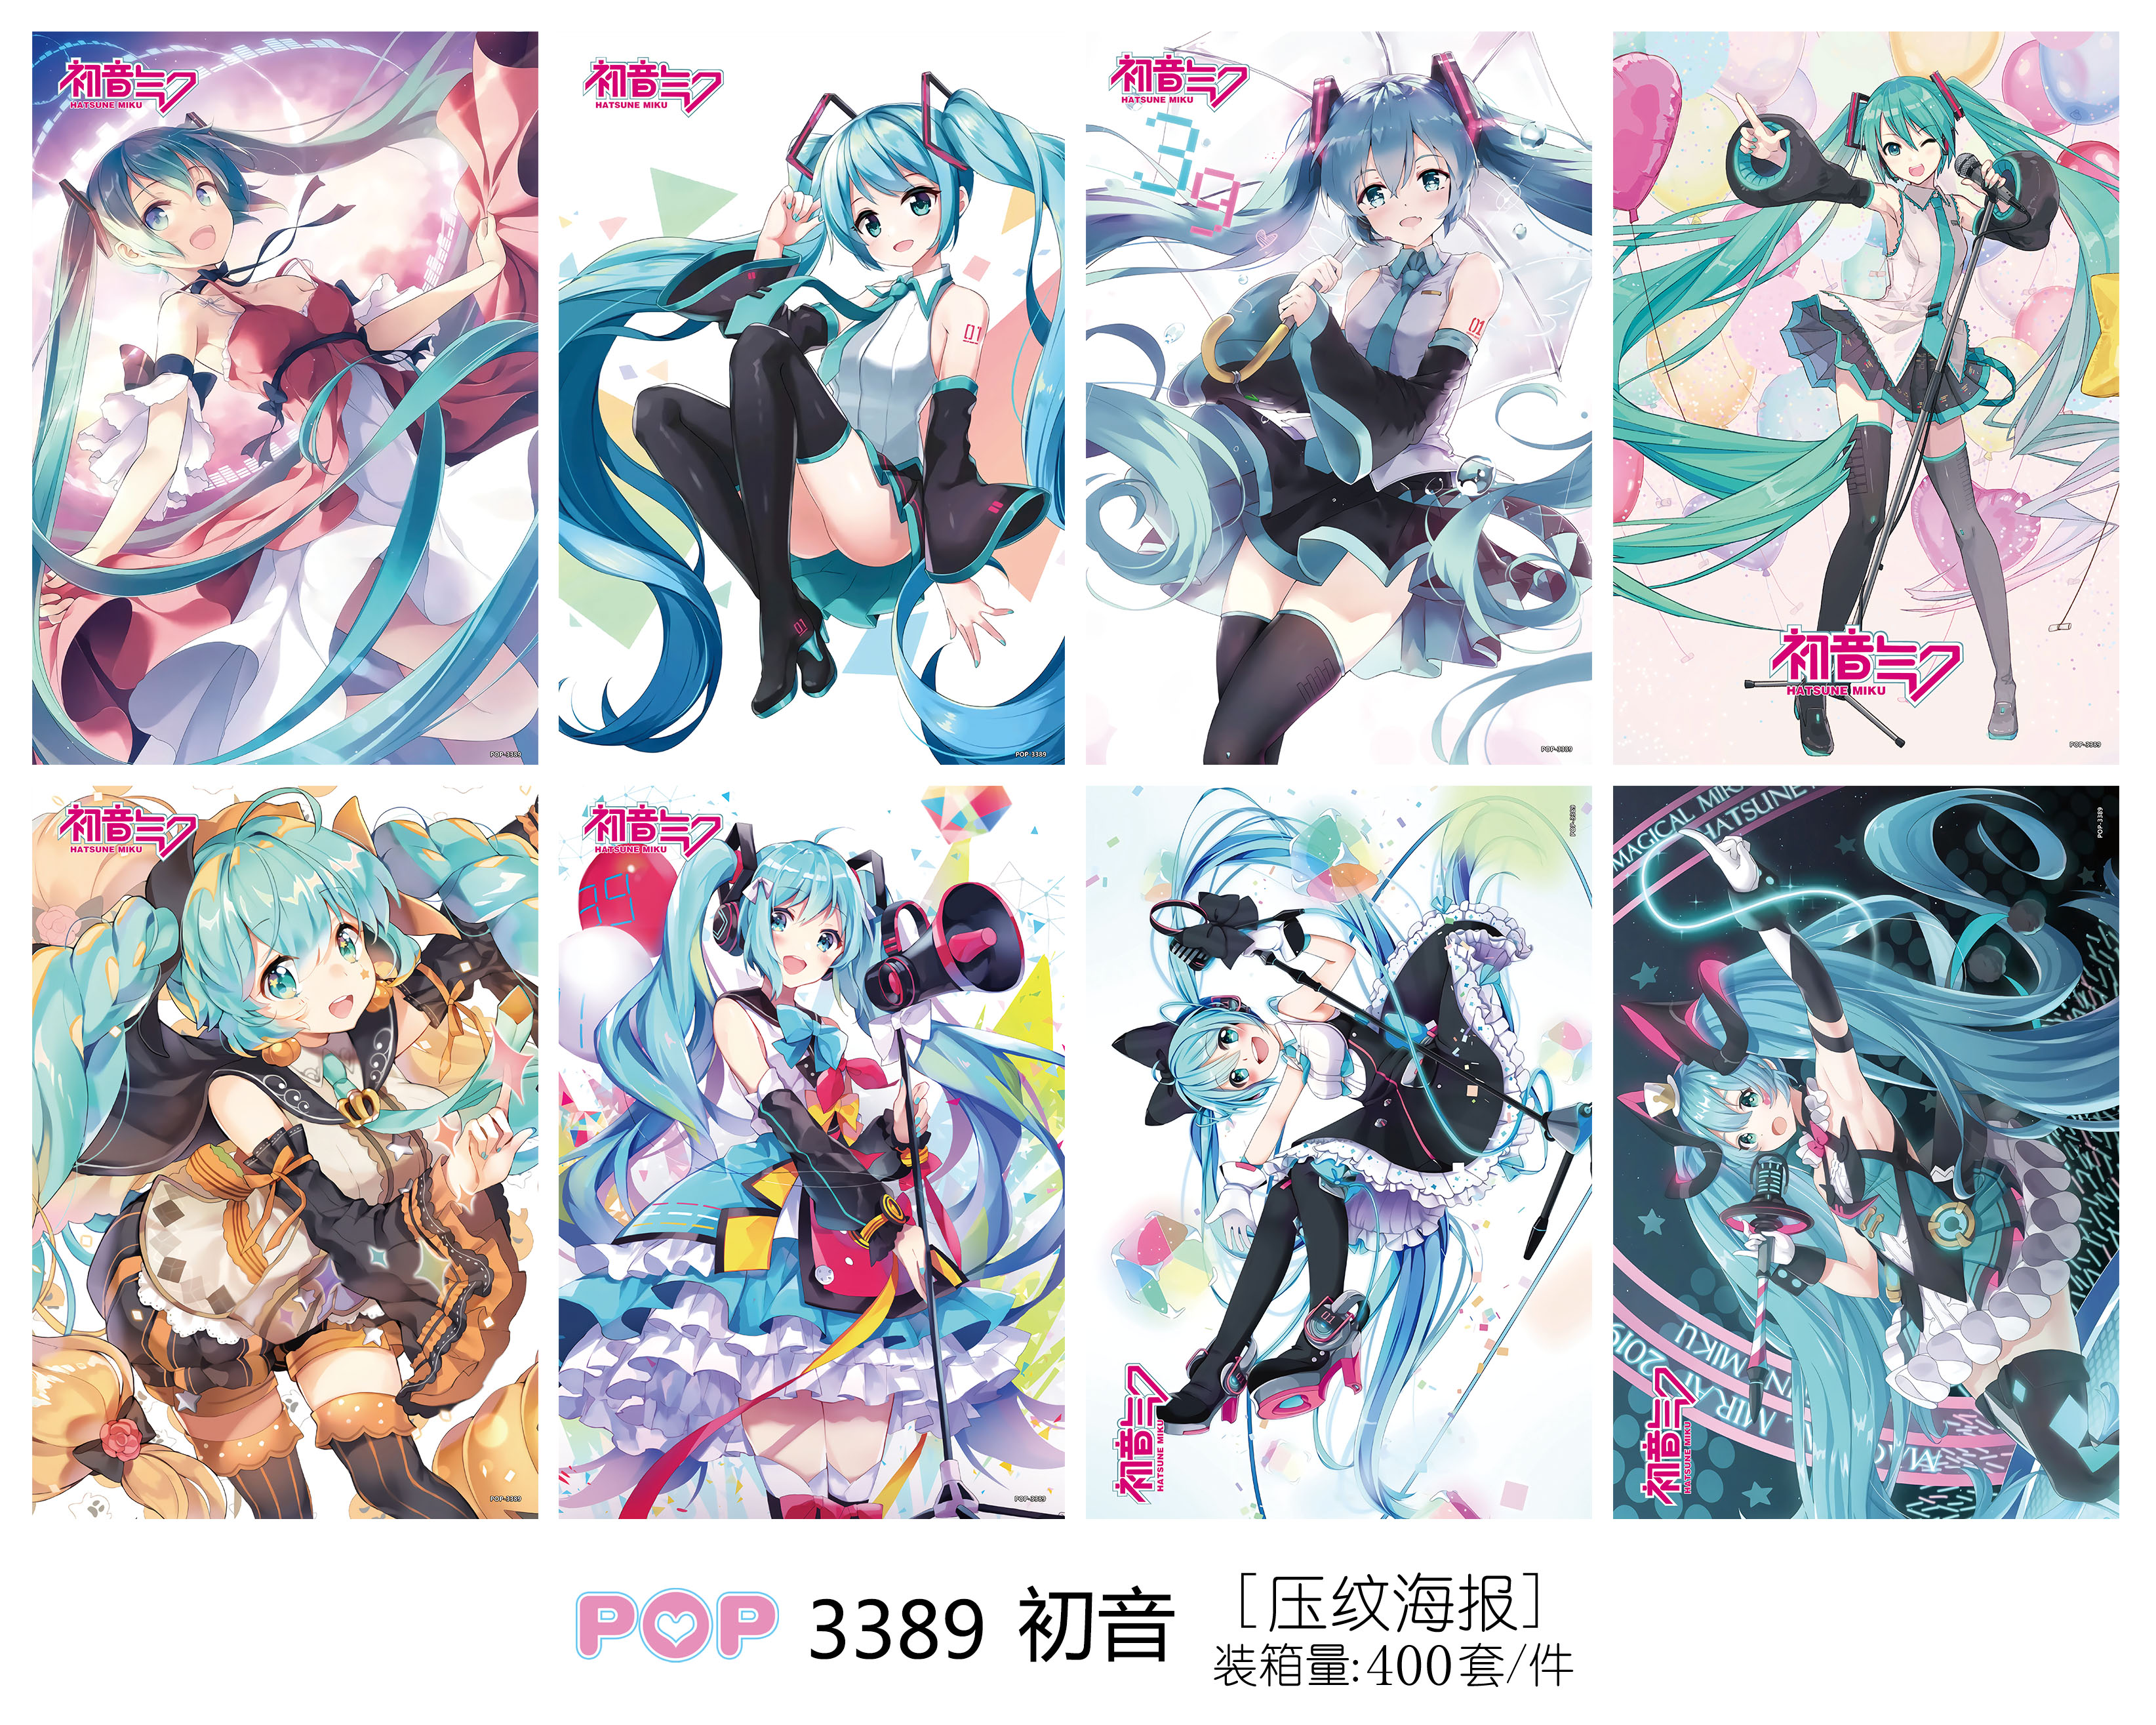 miku hatsune anime poster price for a set of 8 pcs